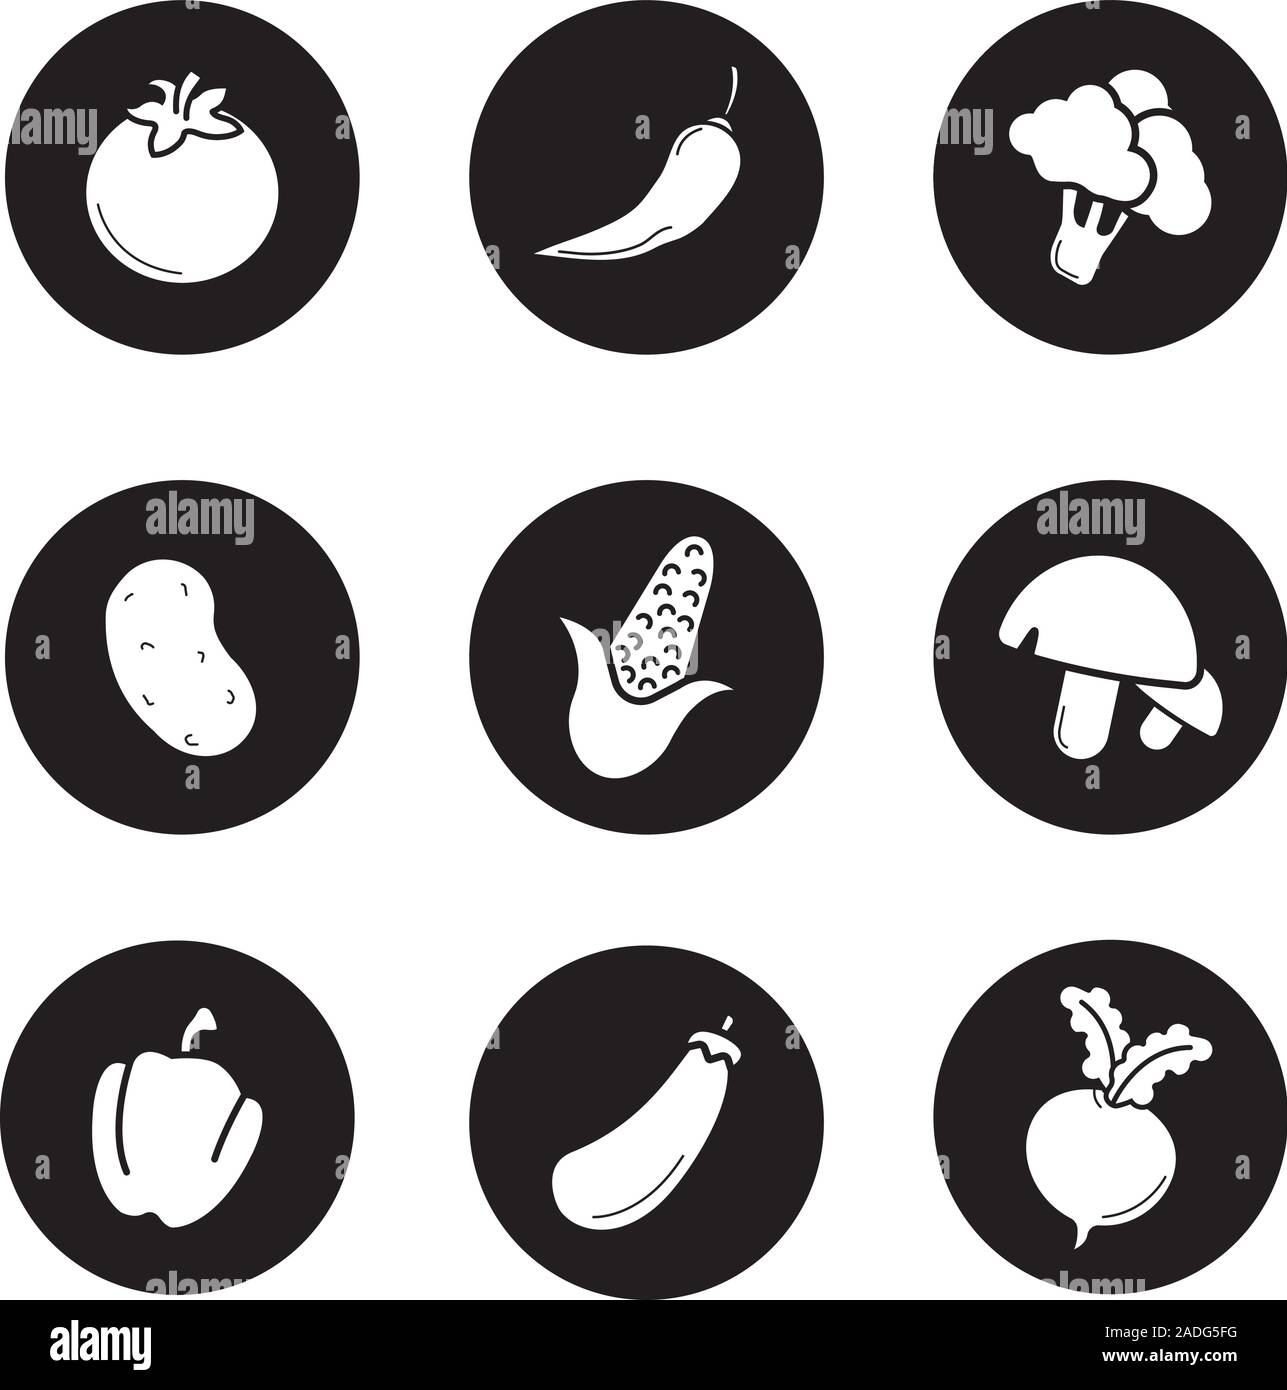 Vegetables icons set. Tomato, hot chili pepper, broccoli, potato, corn, mushrooms, beetroot, paprika, eggplant, maize, turnip. Vector white silhouette Stock Vector